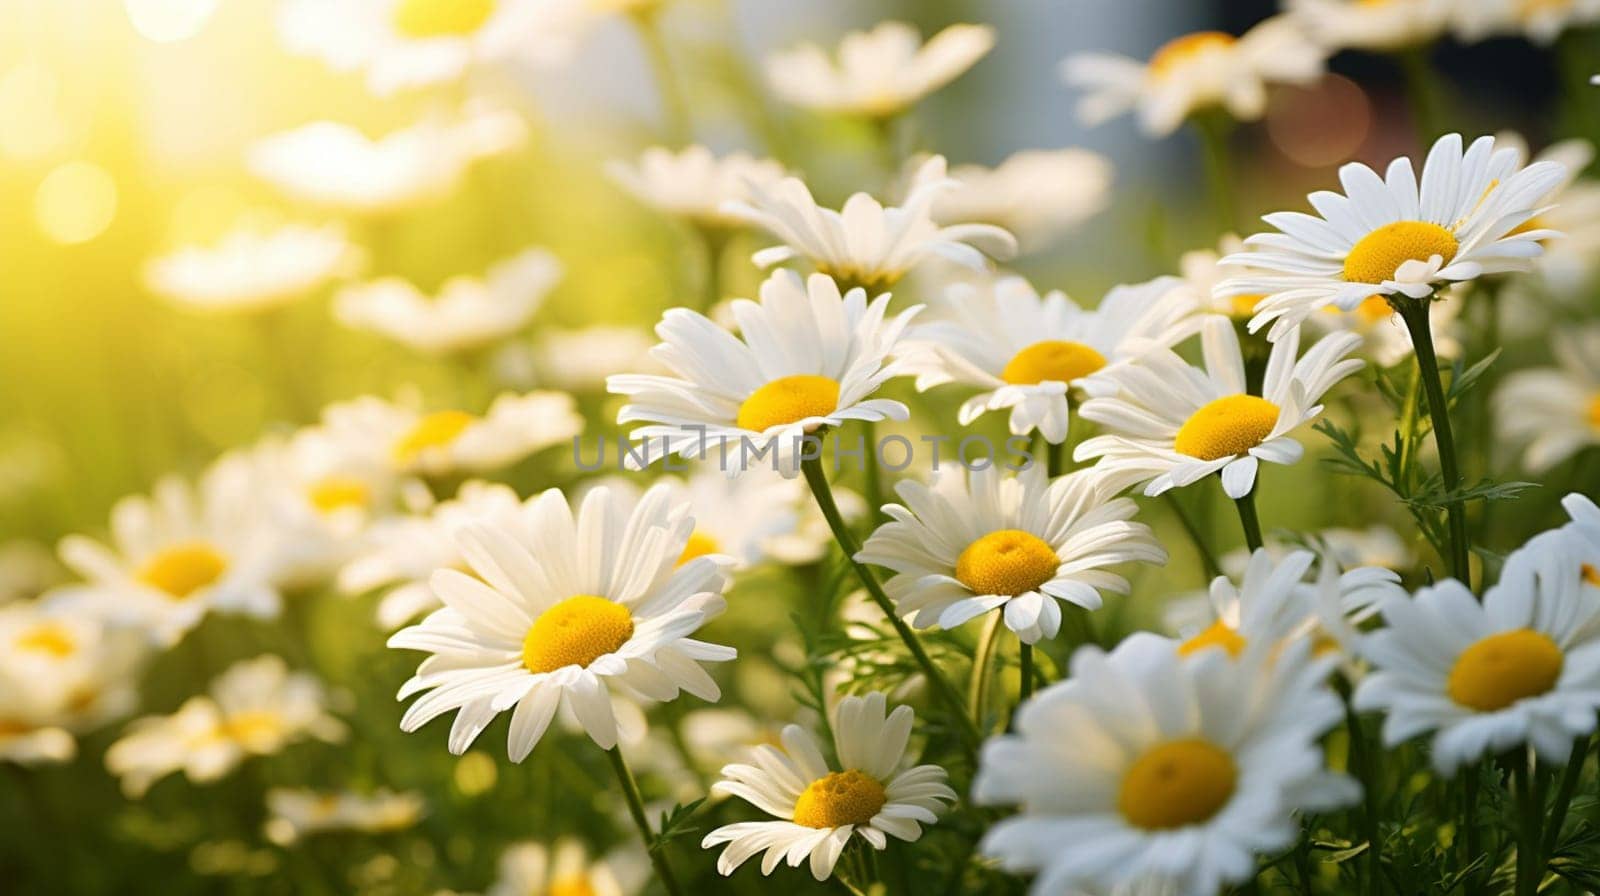 Field of daisies with sunlight filtering through petals by kizuneko